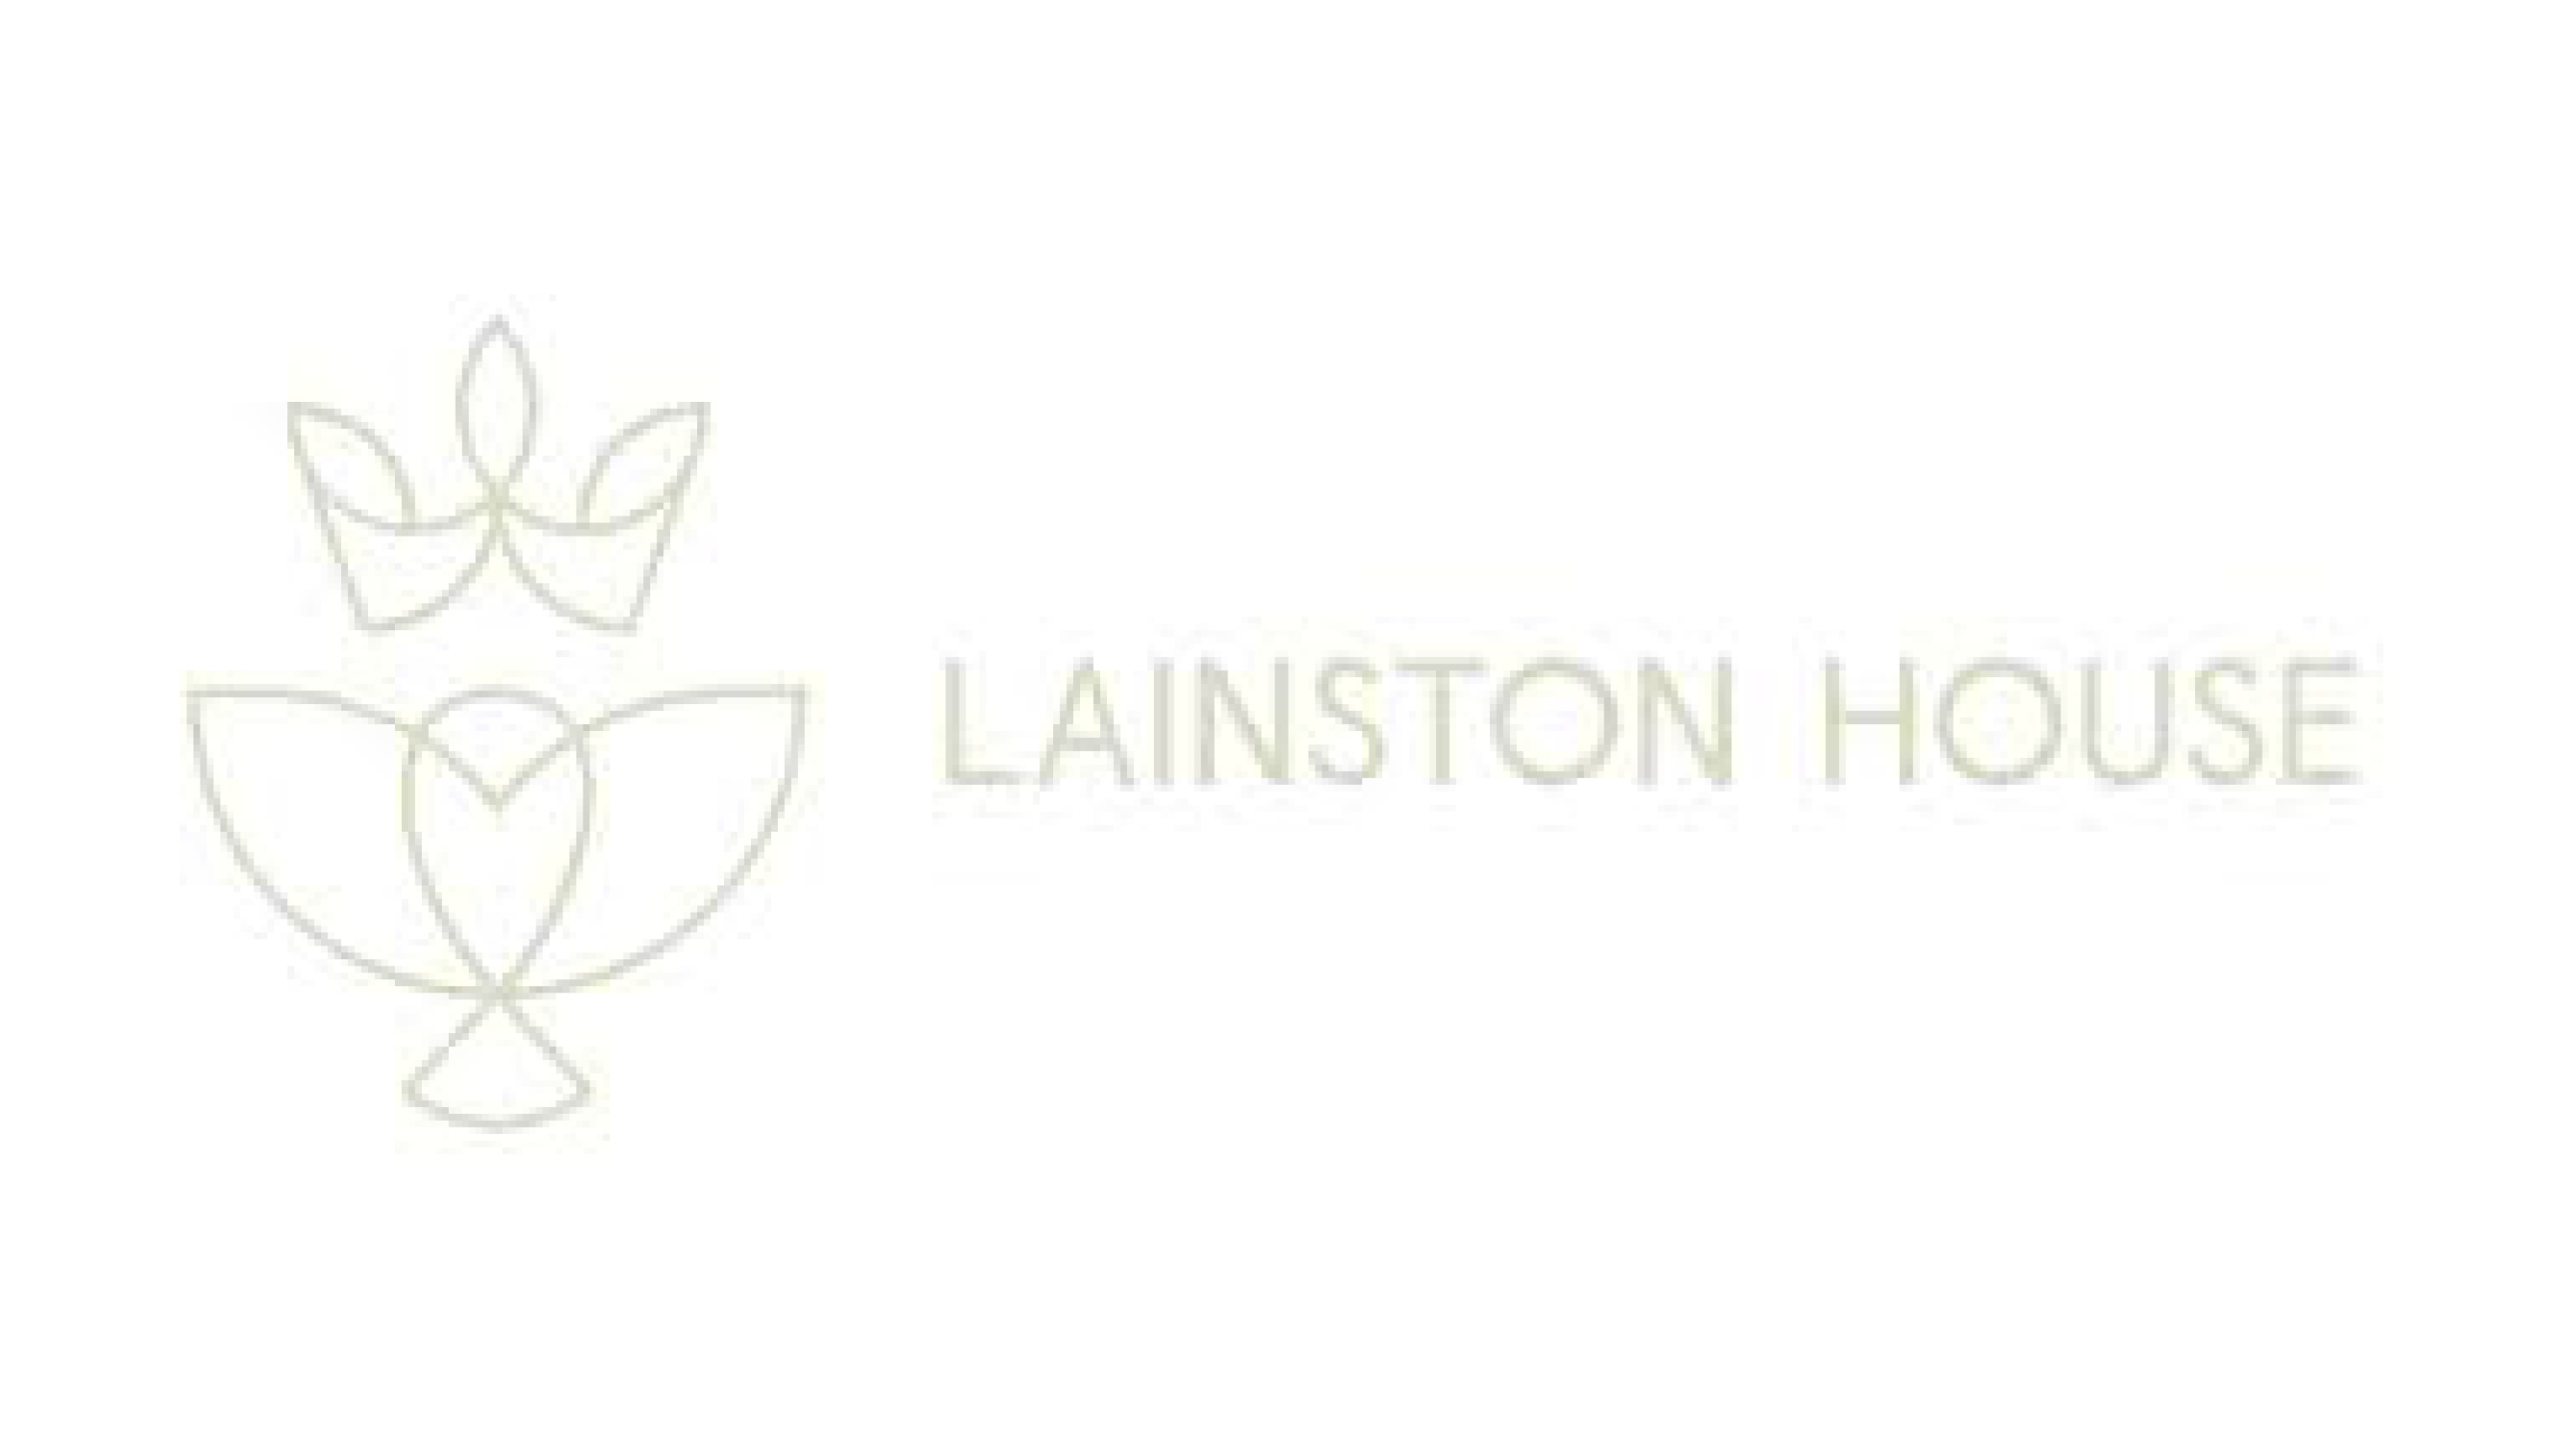 Lainston House Logo